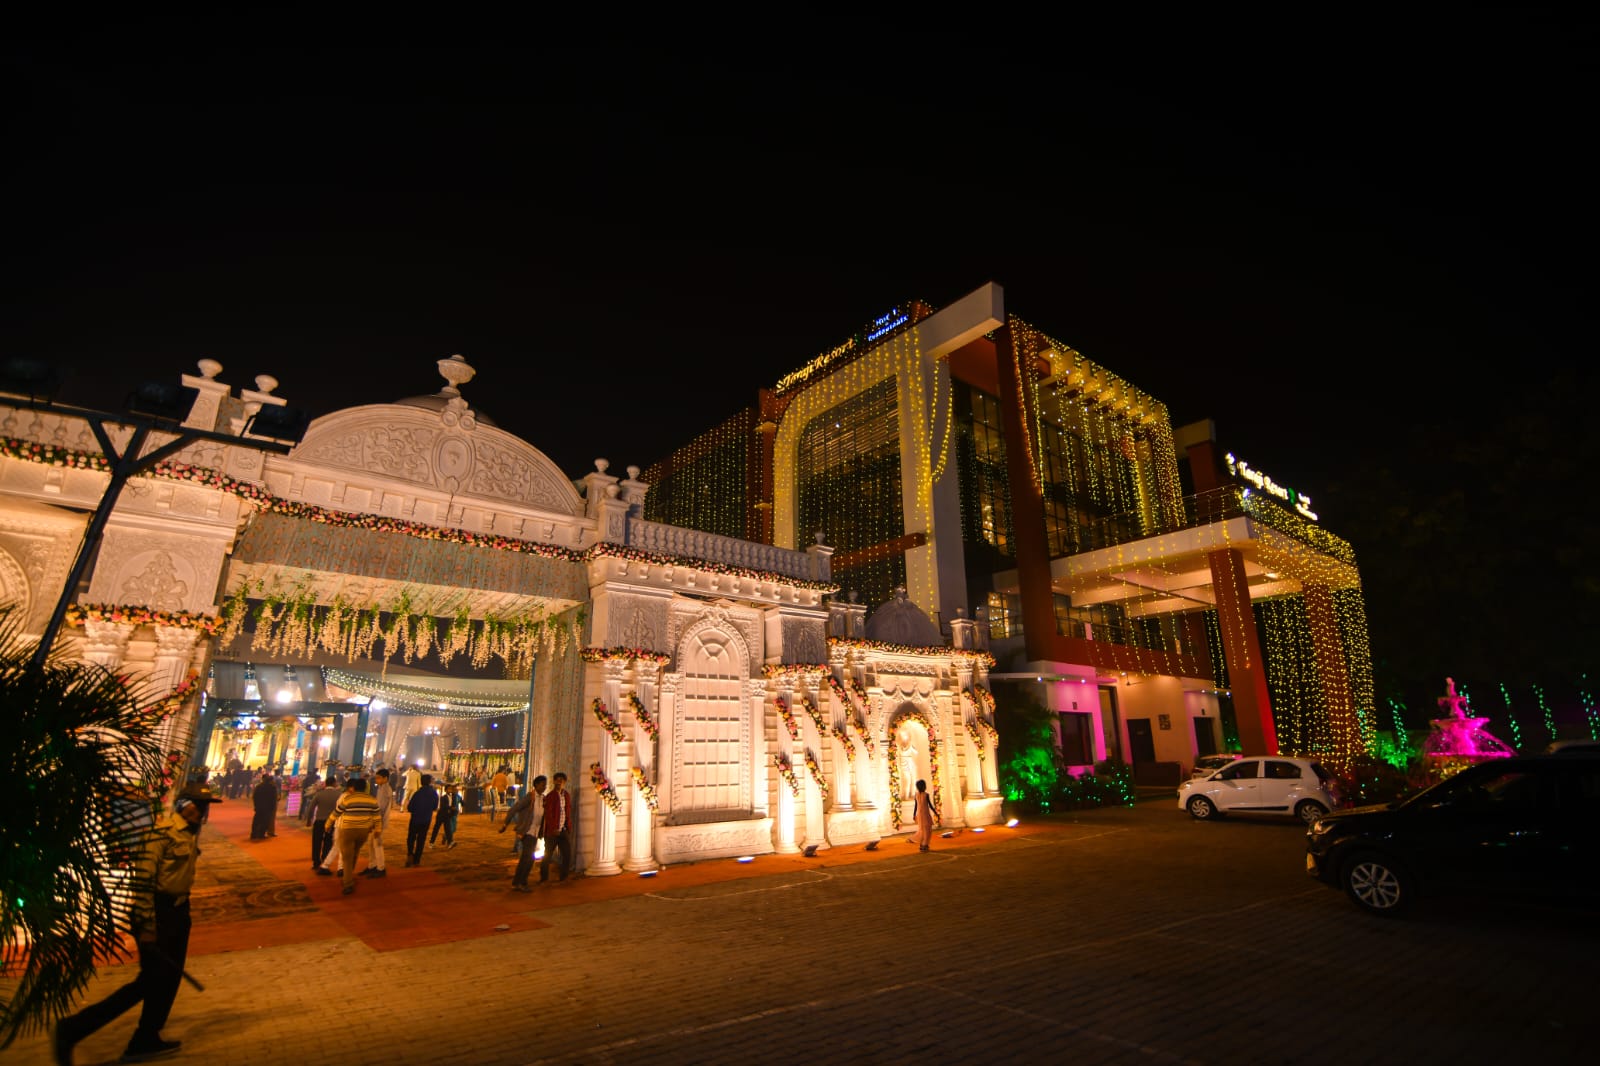 Hotel in Ayodhya (Faizabad), Hotel in Faizabad | Best Hotel in Faizabad, Ayodhya | Marriage Lawn in Faizabad | Wedding Banquet in faizabad | Taraji Resort Hotel and Restaurant